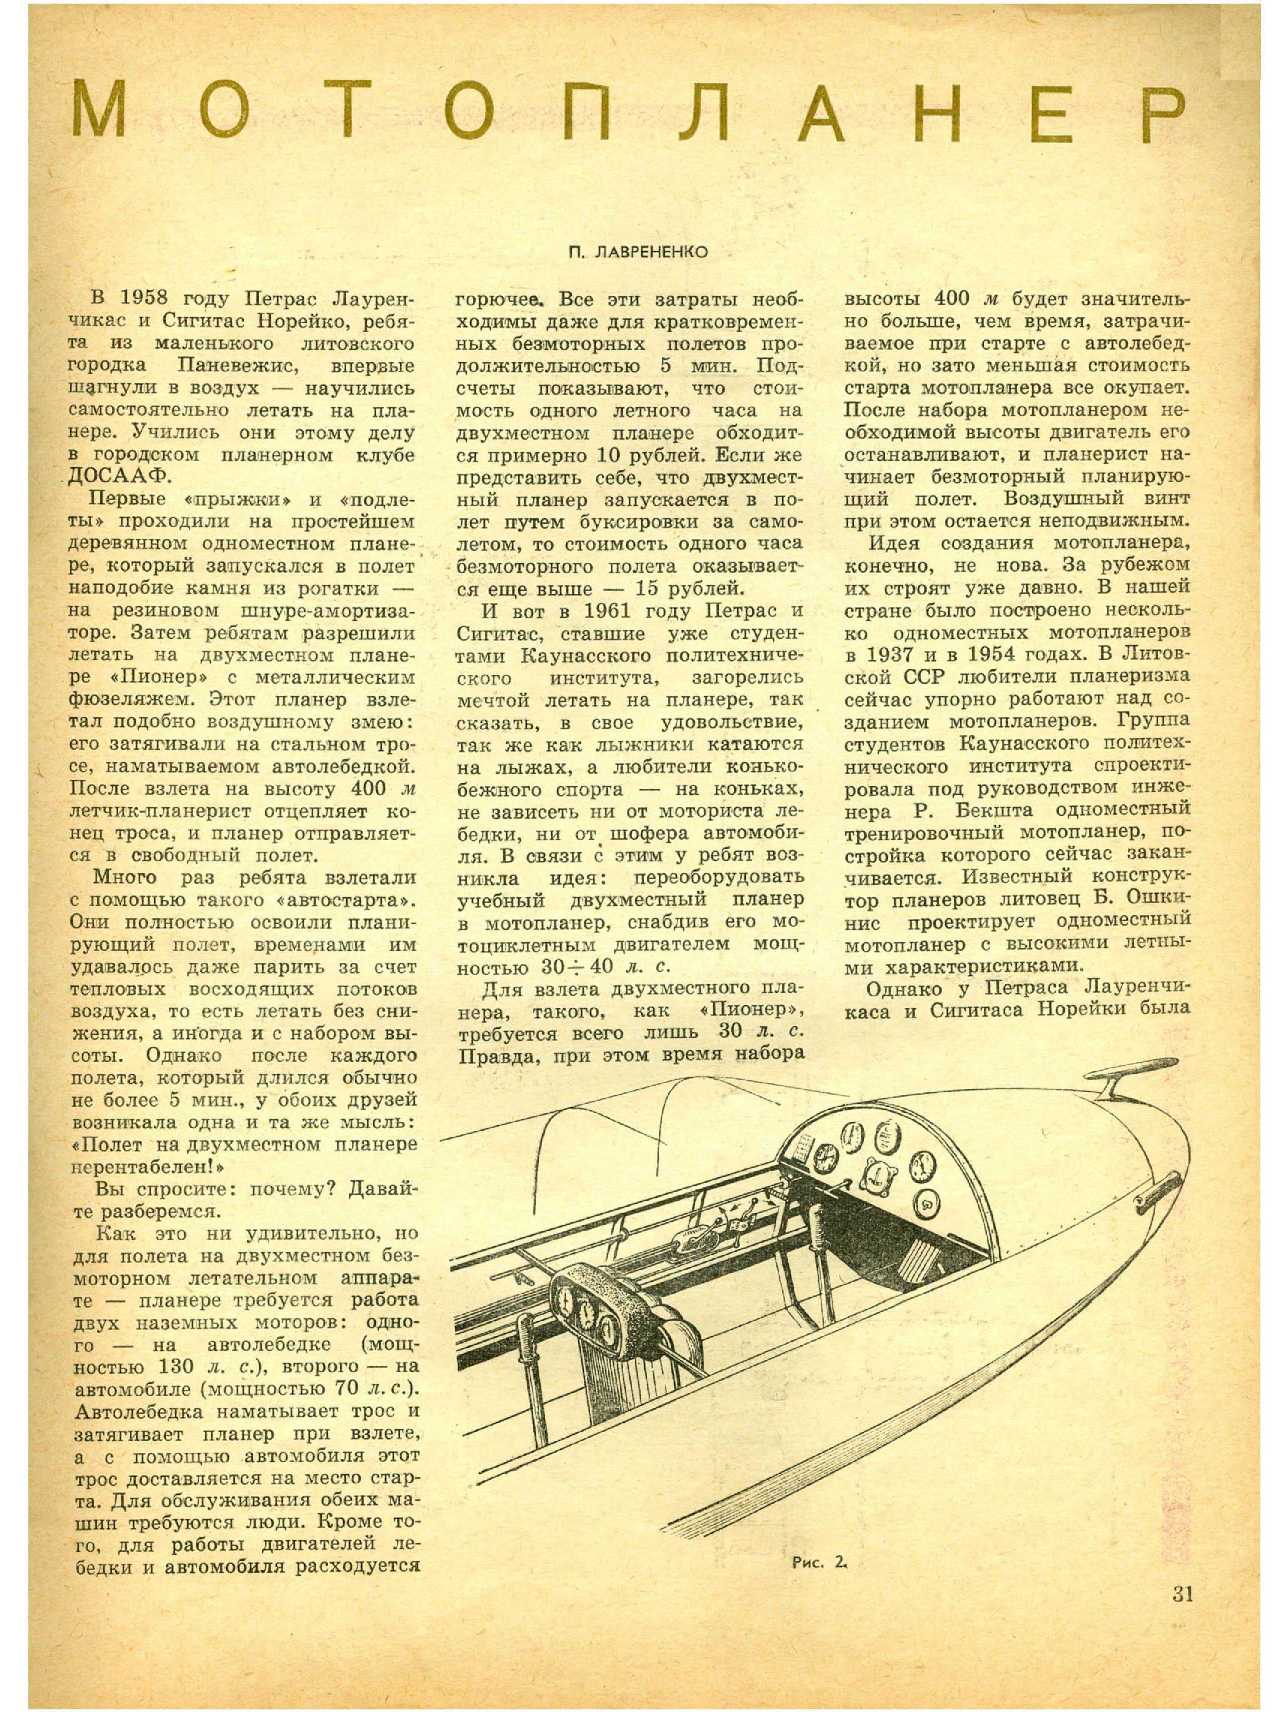 ЮМК 11, 1965, 31 c.